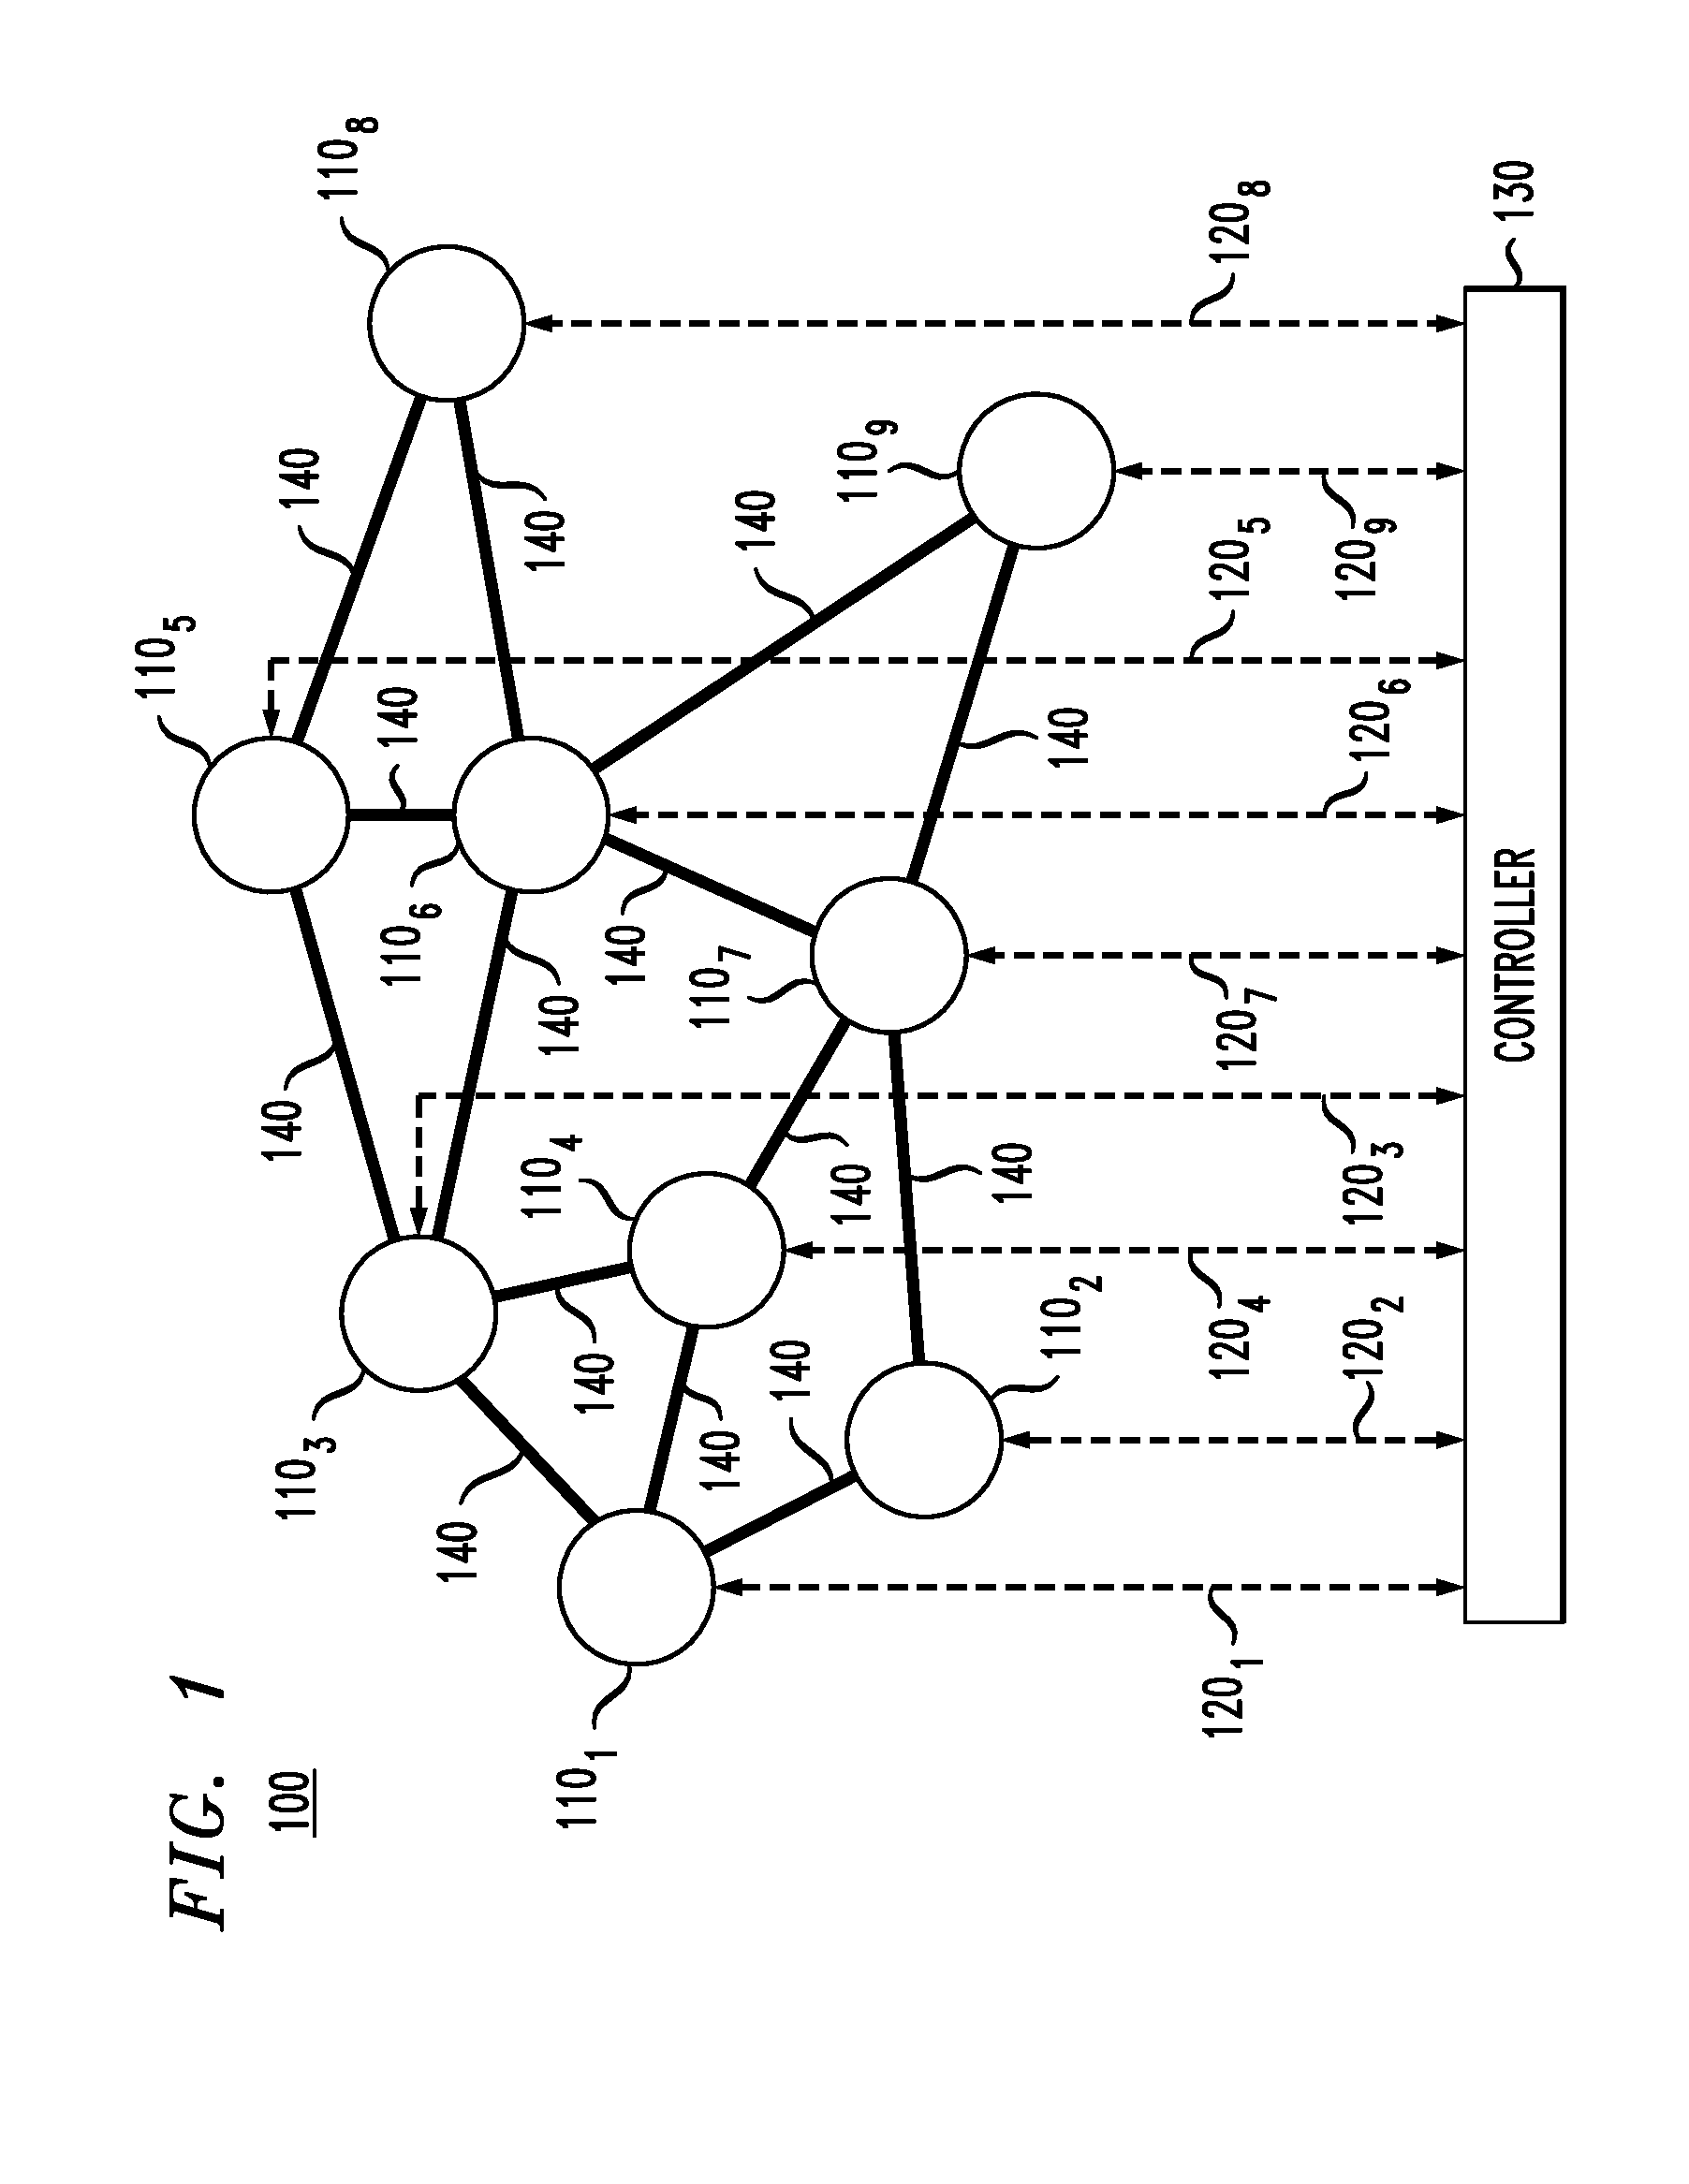 High-throughput routing in an optical network having a mesh topology